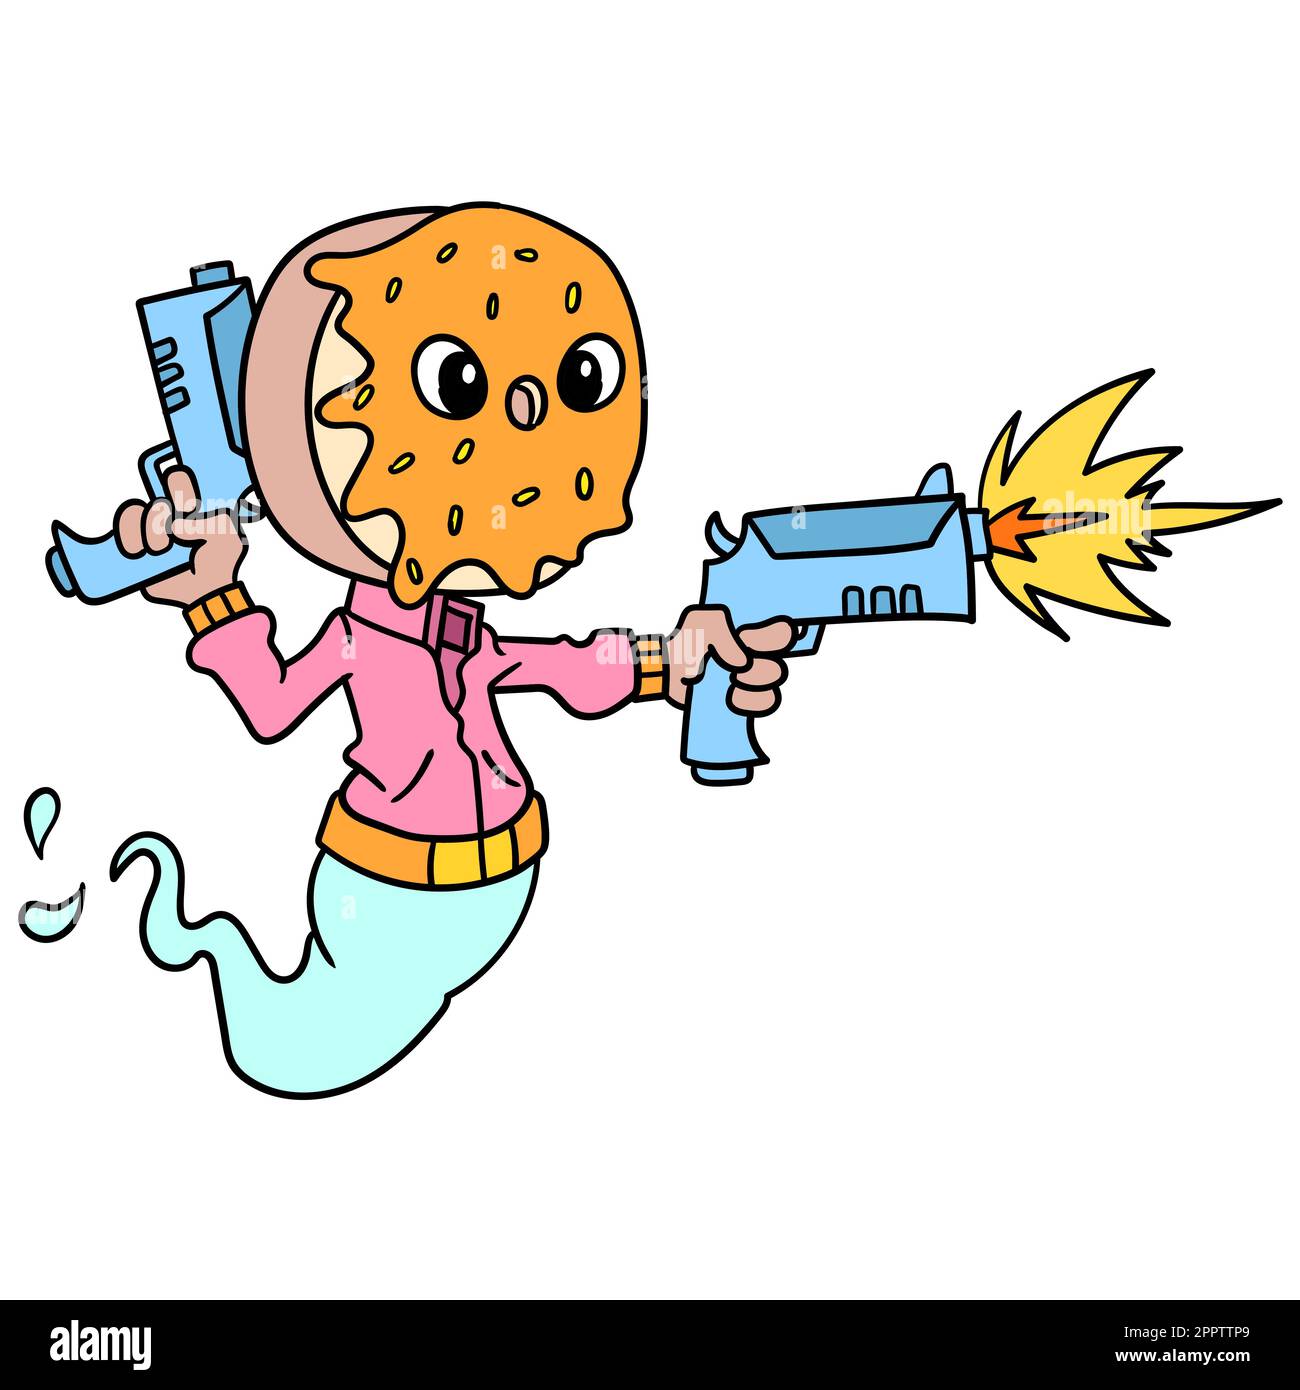 monster donut head shooting gun, doodle icon image kawaii Stock Vector